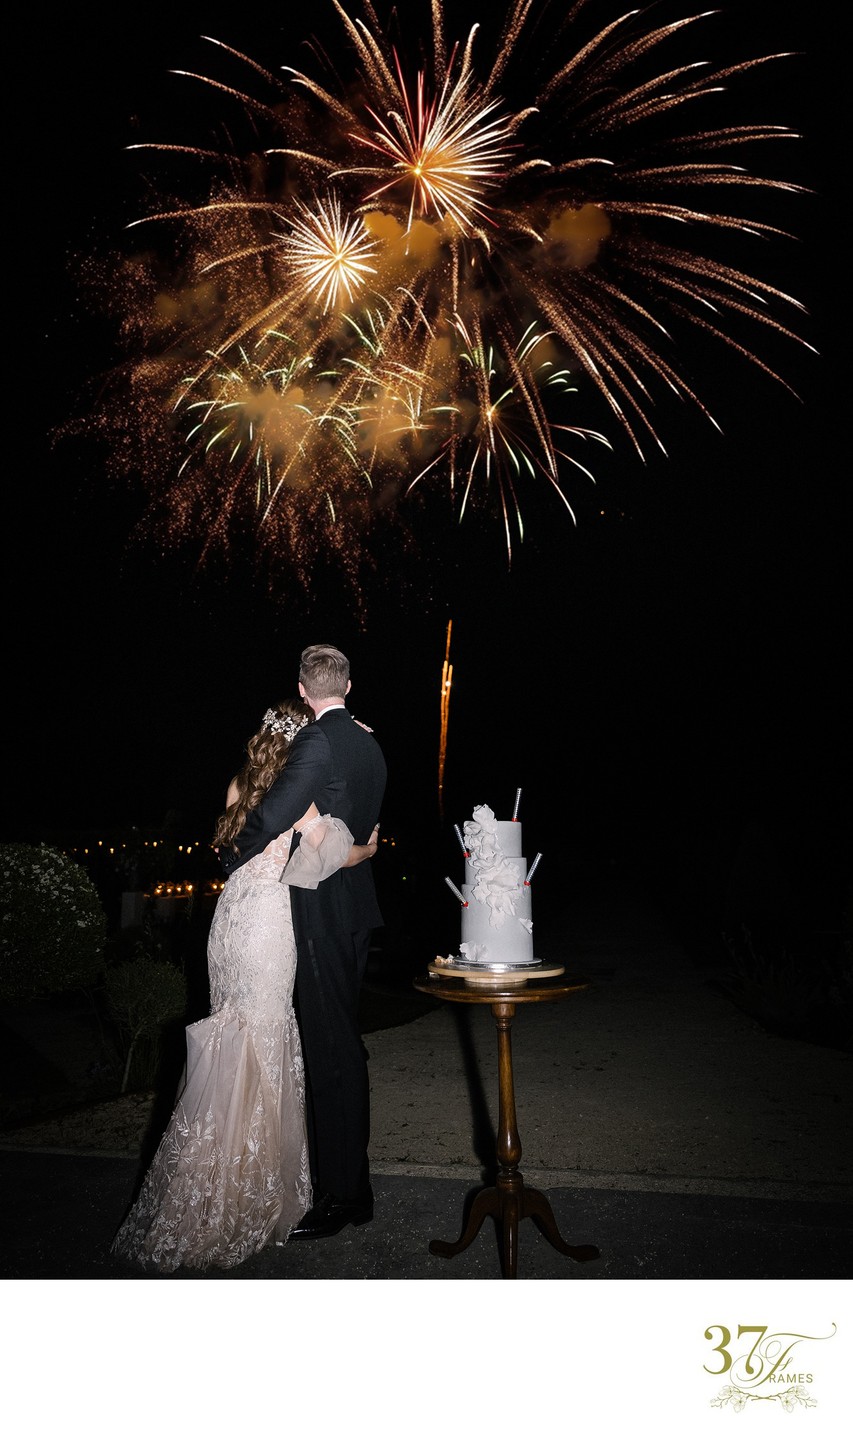 Celebration: Fireworks Illuminate Love at wedding